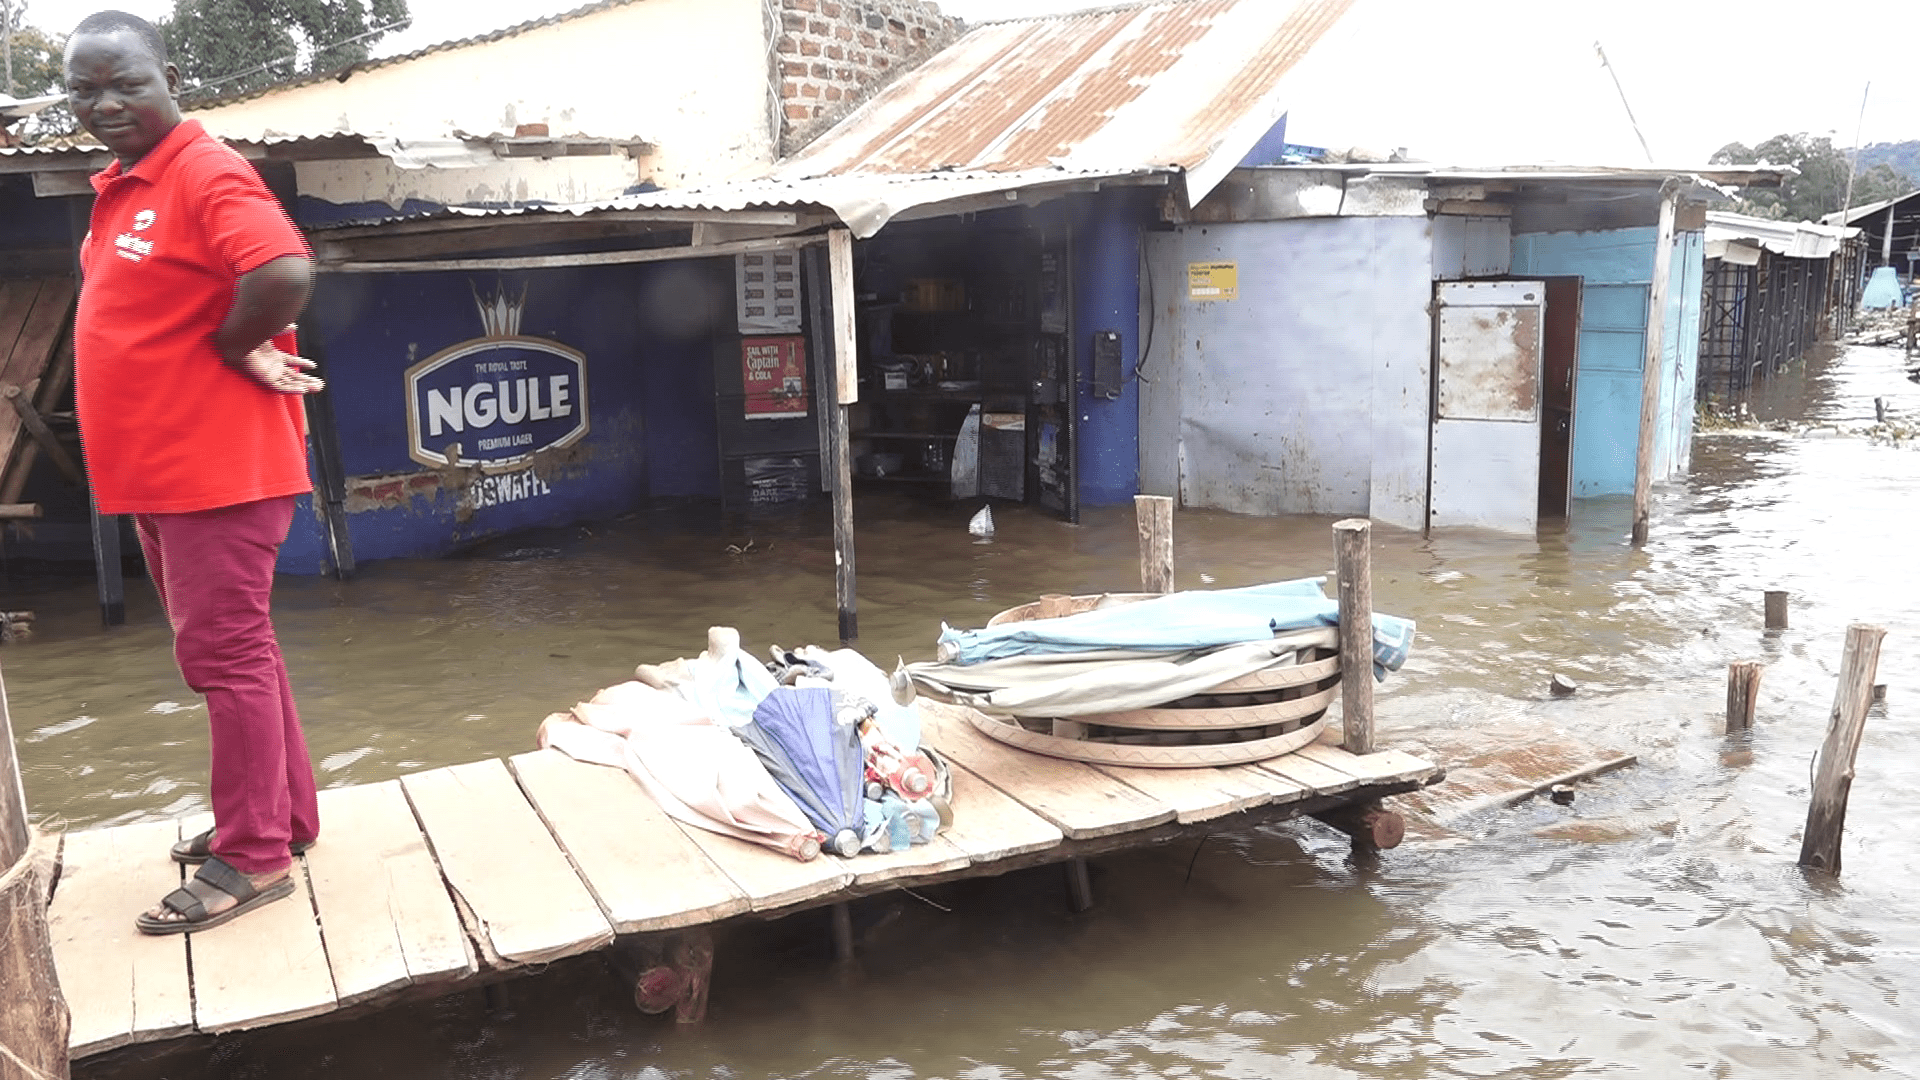 Flooded Ggaba market in Luzira, Kampala after Lake Victoria burst its banks. Image by Noah Omuya. Uganda, 2020.